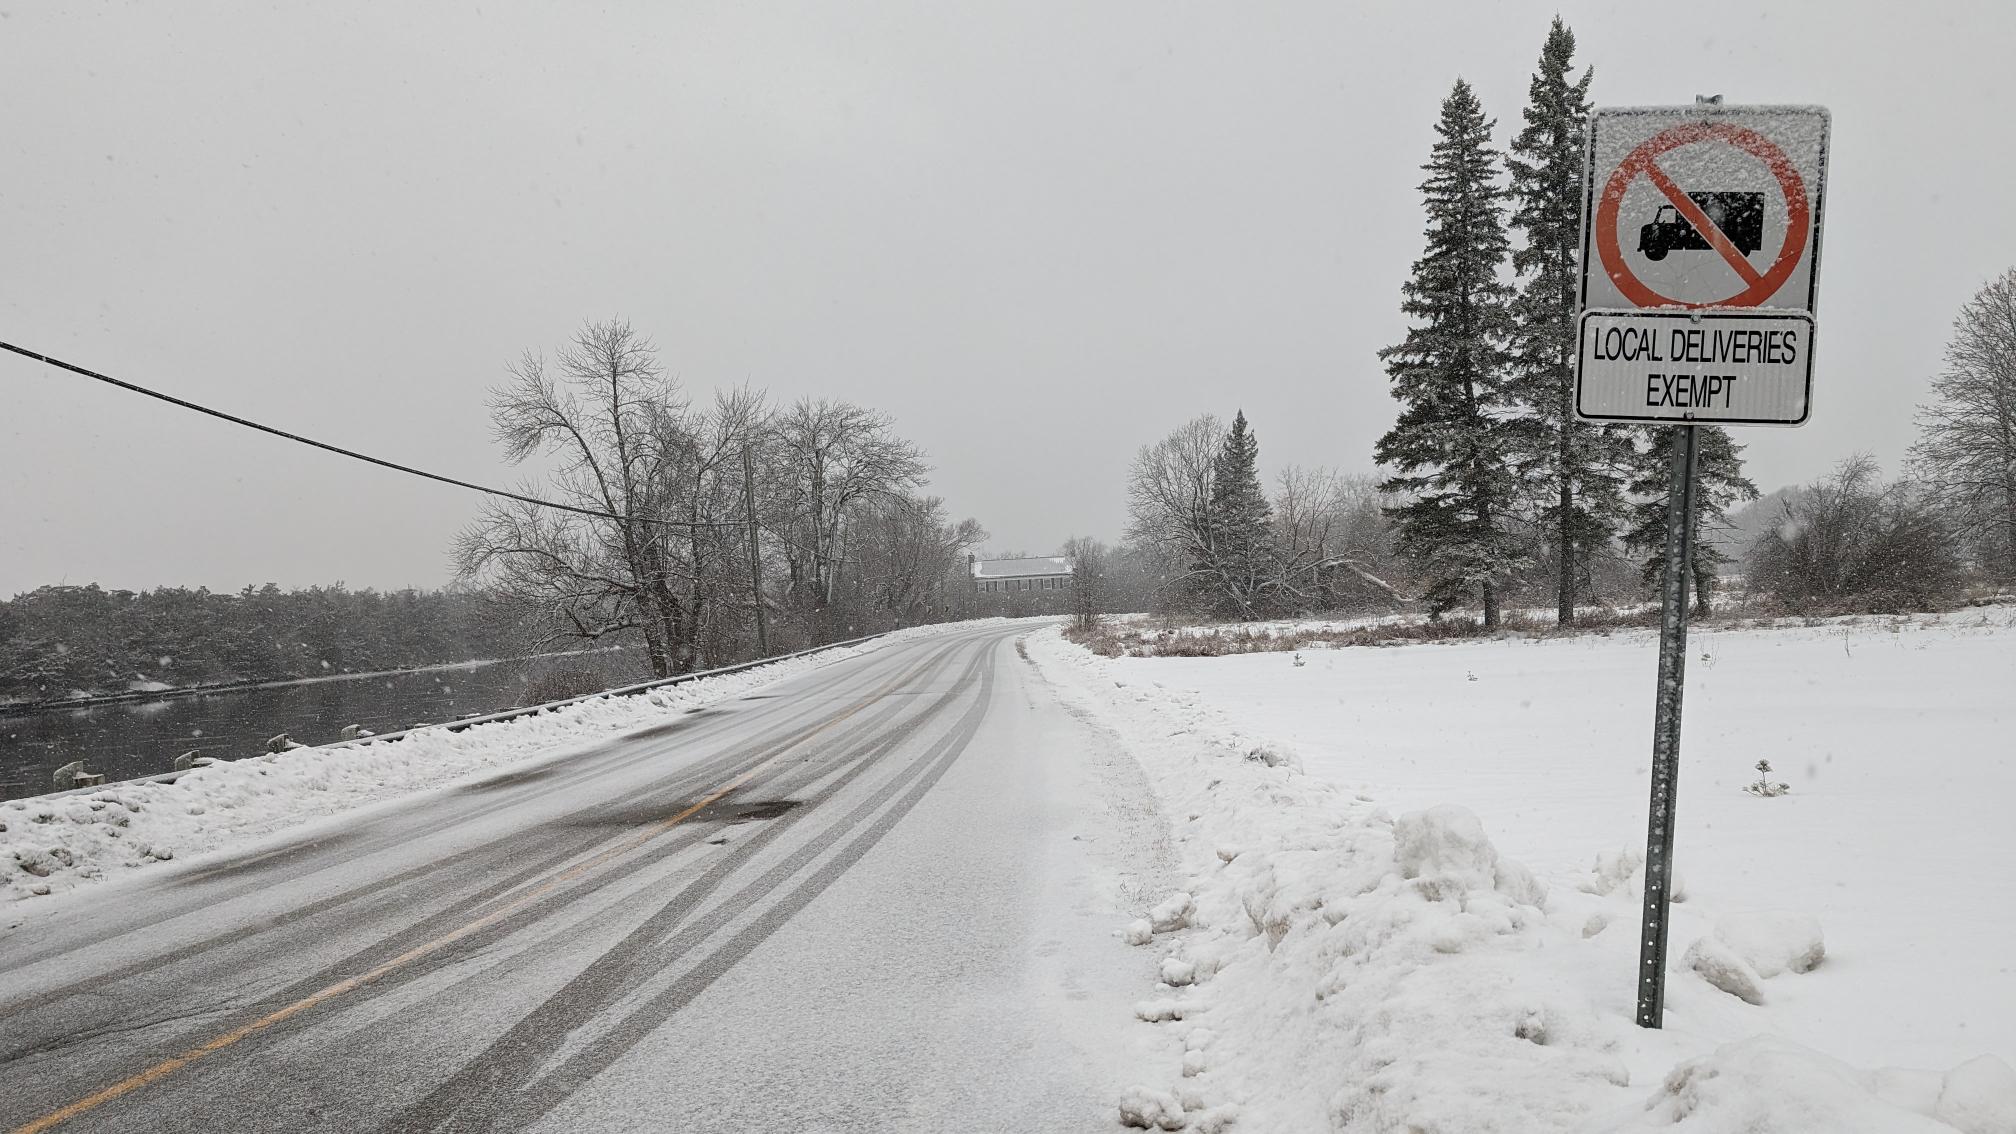 Half-load restrictions street sign along snowy road in Belleville